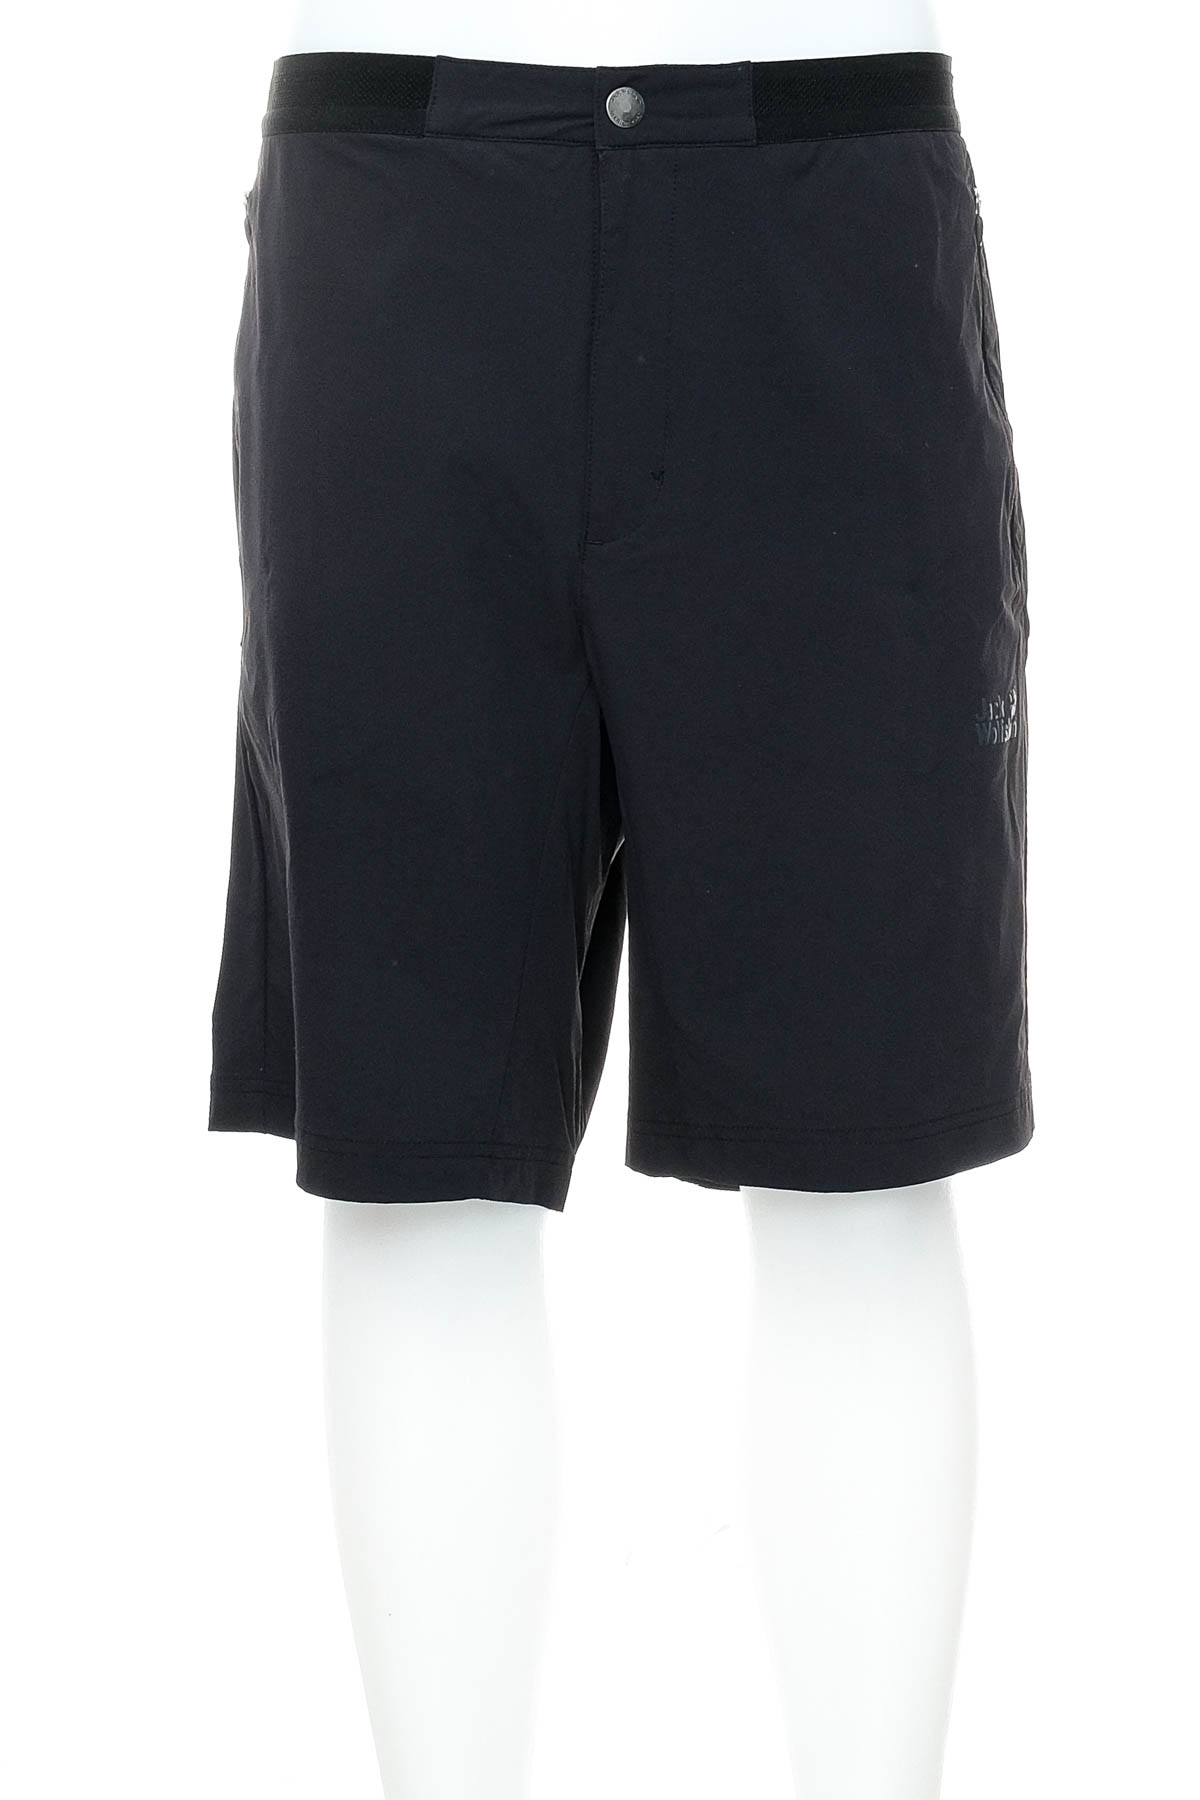 Men's shorts - Jack Wolfskin - 0